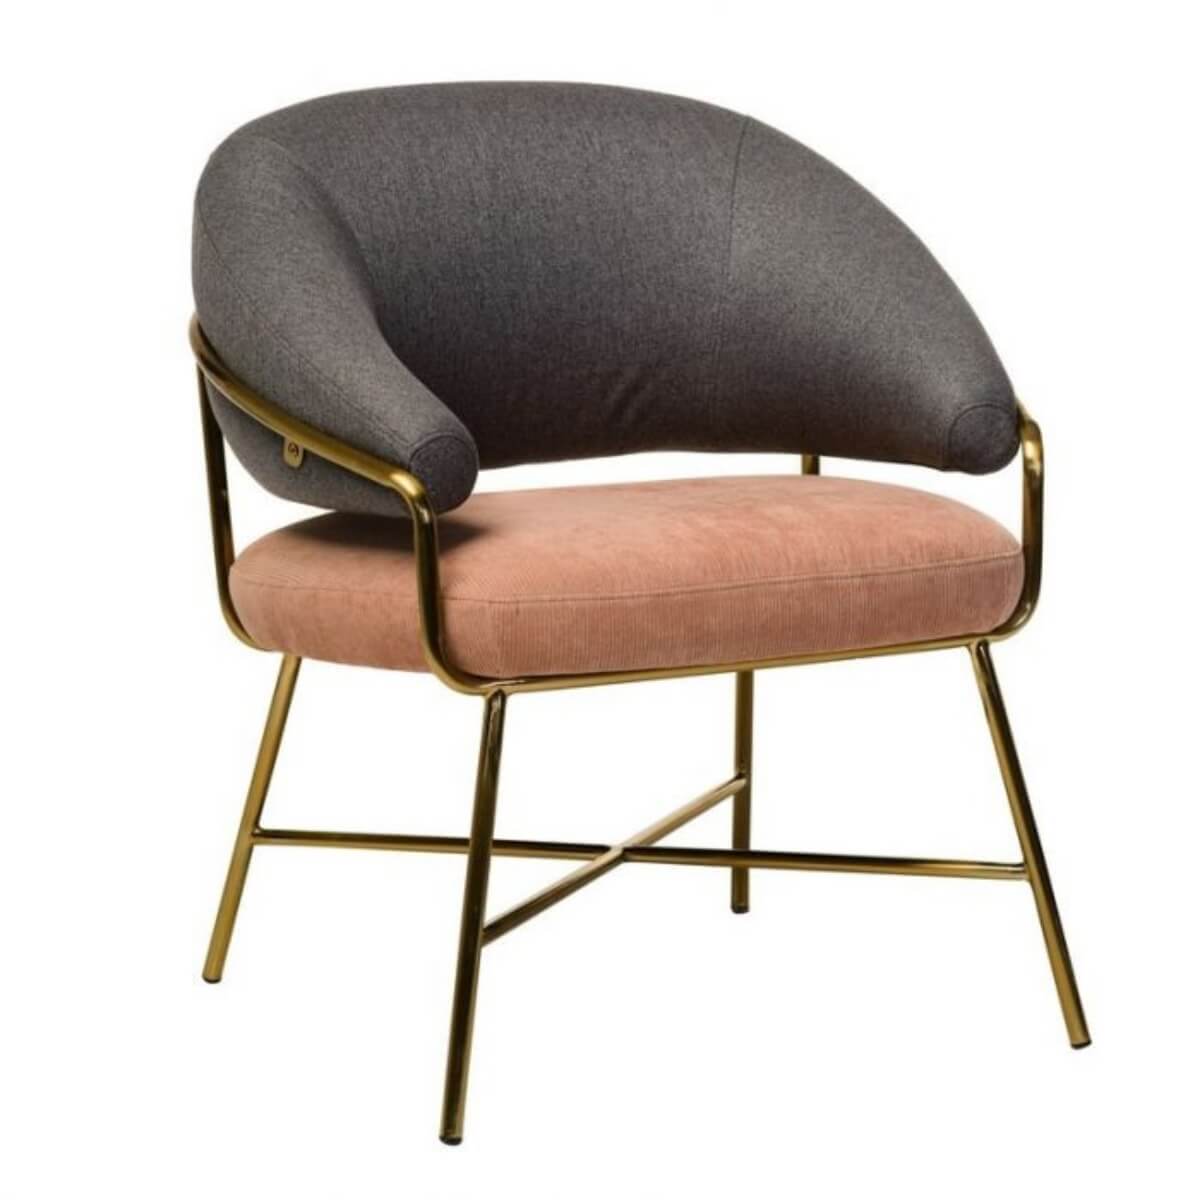 Designer-leisure-chair-in-Australia-3